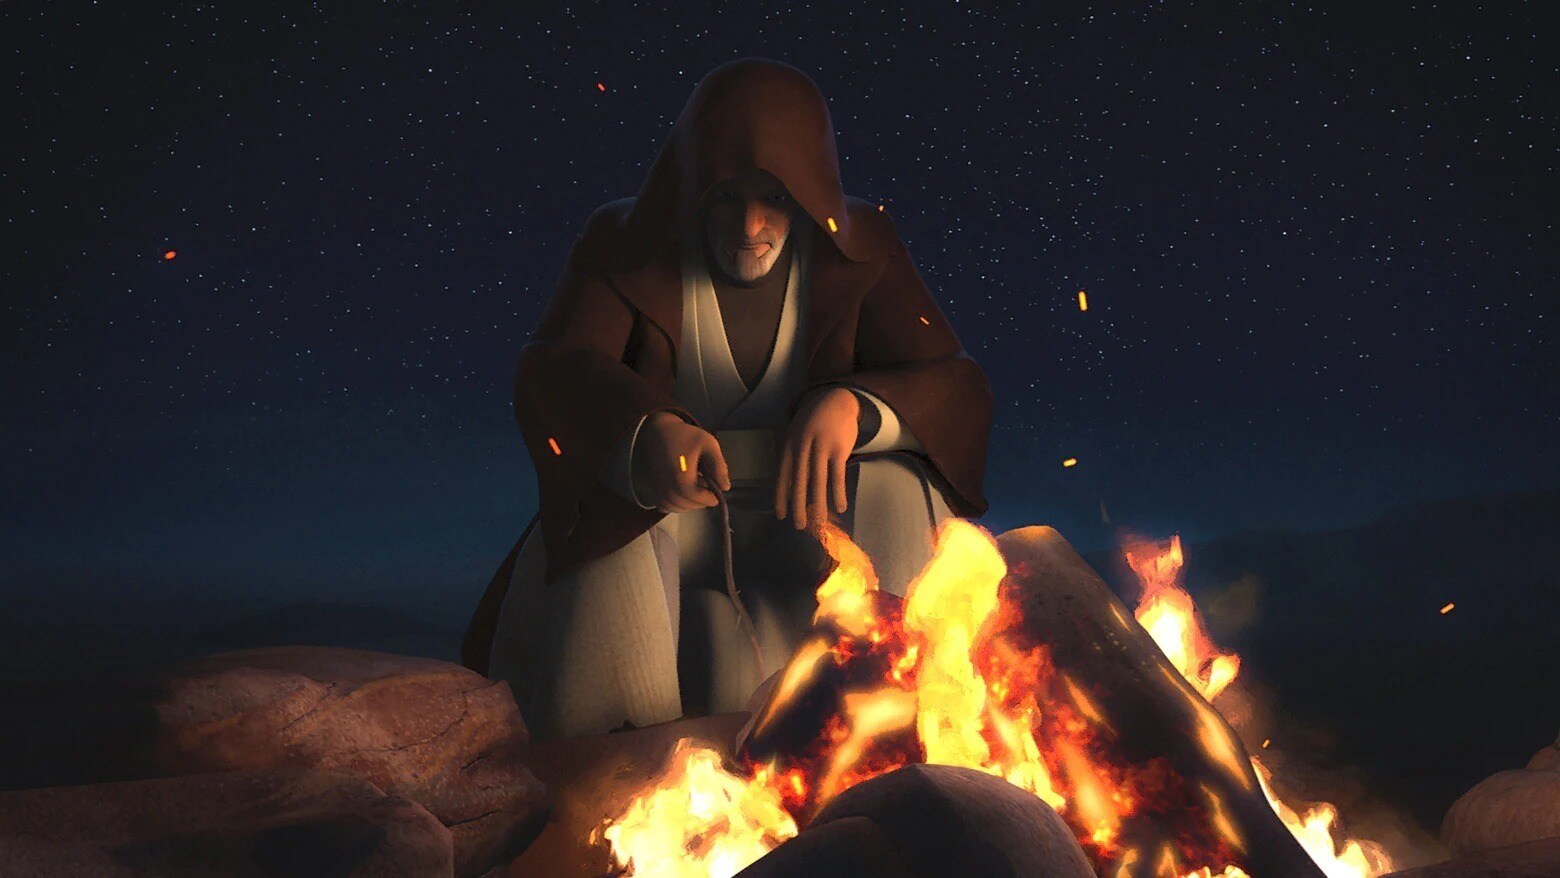 Obi-Wan Kenobi sitting by a campfire on Tatooine